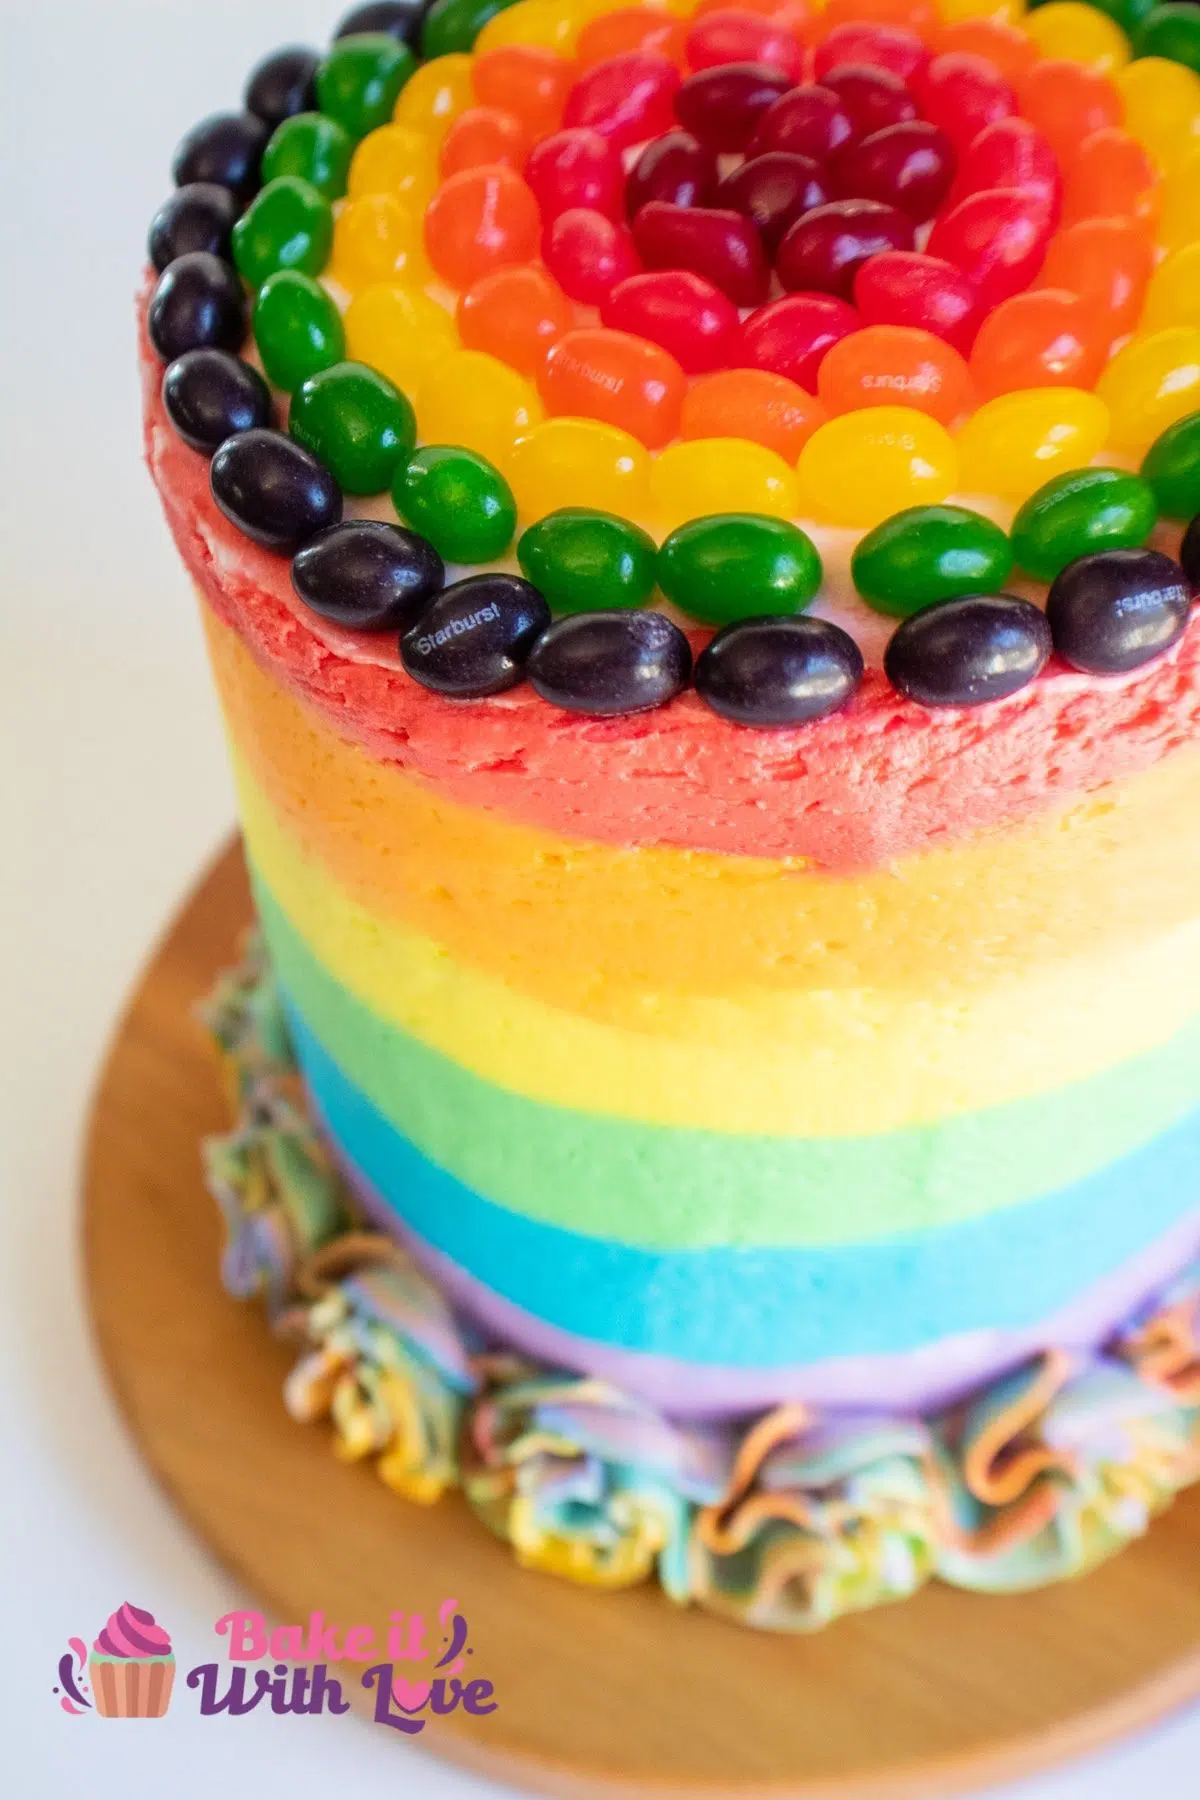 Tall image of multi layered rainbow cake.